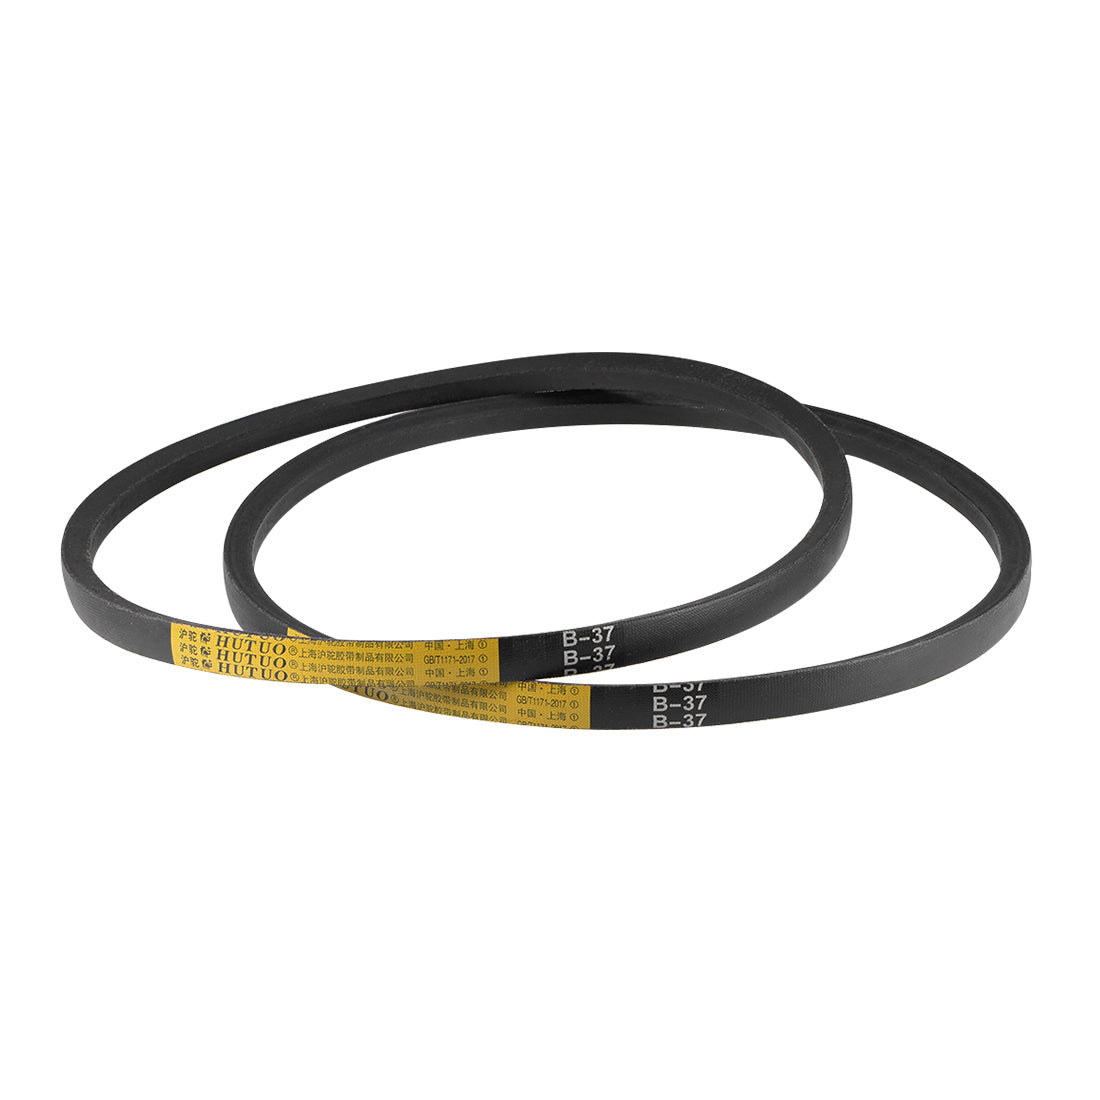 uxcell Uxcell B37 V-Belts 37" Pitch Length, B-Section Rubber Drive Belt 2pcs